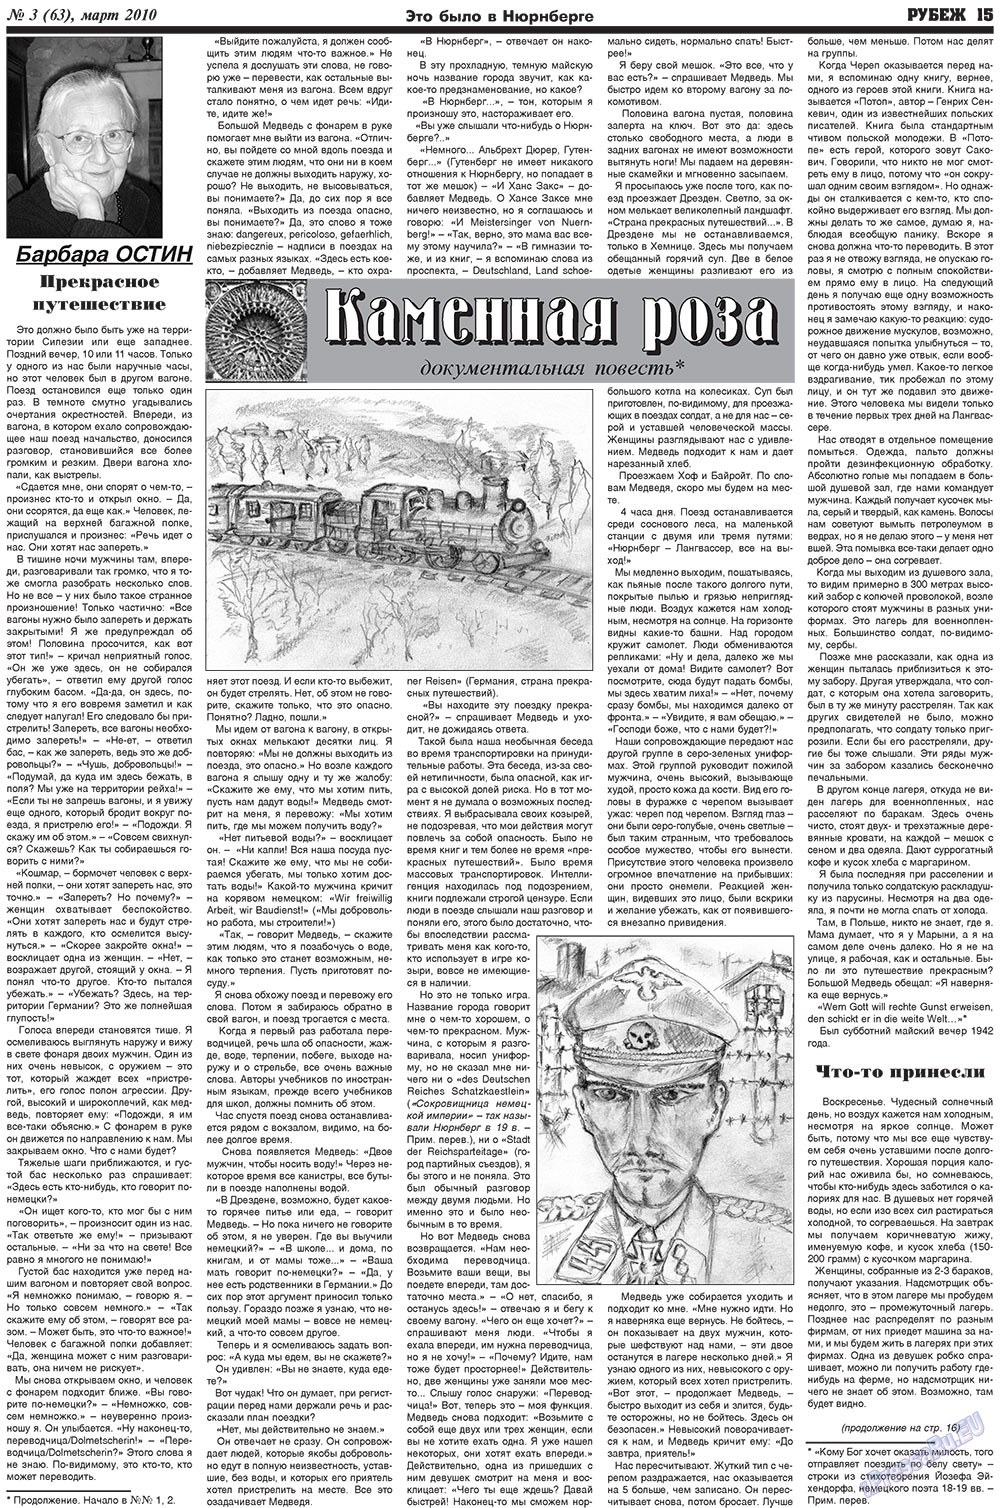 Рубеж, газета. 2010 №3 стр.15